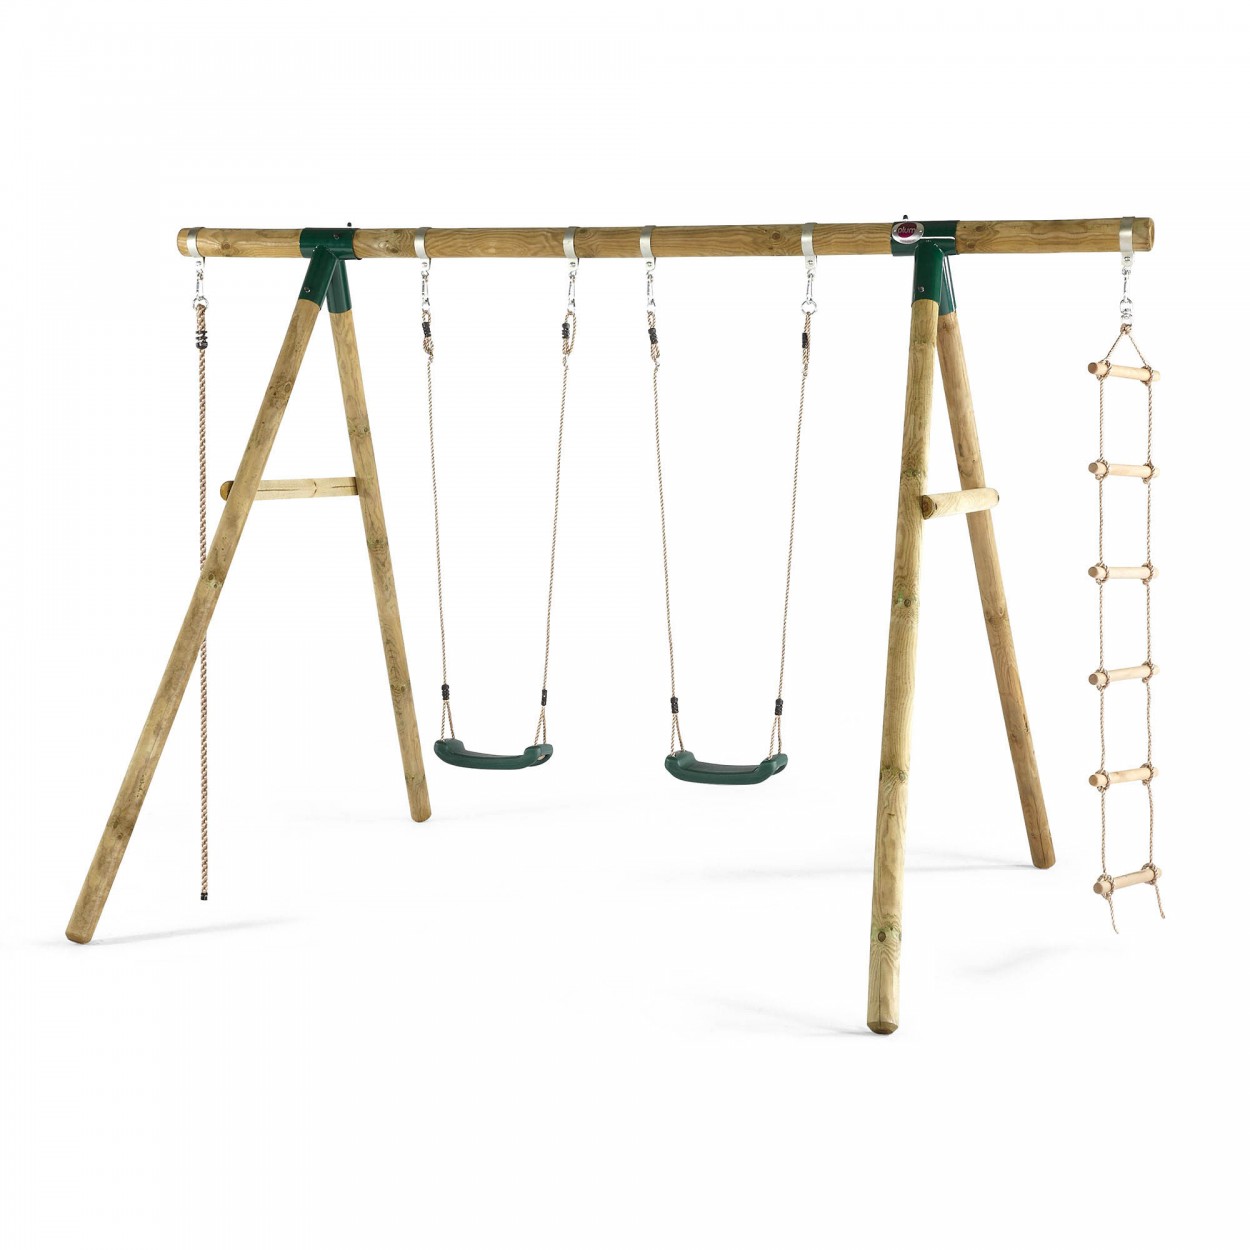 Gibbon Swing Set Image